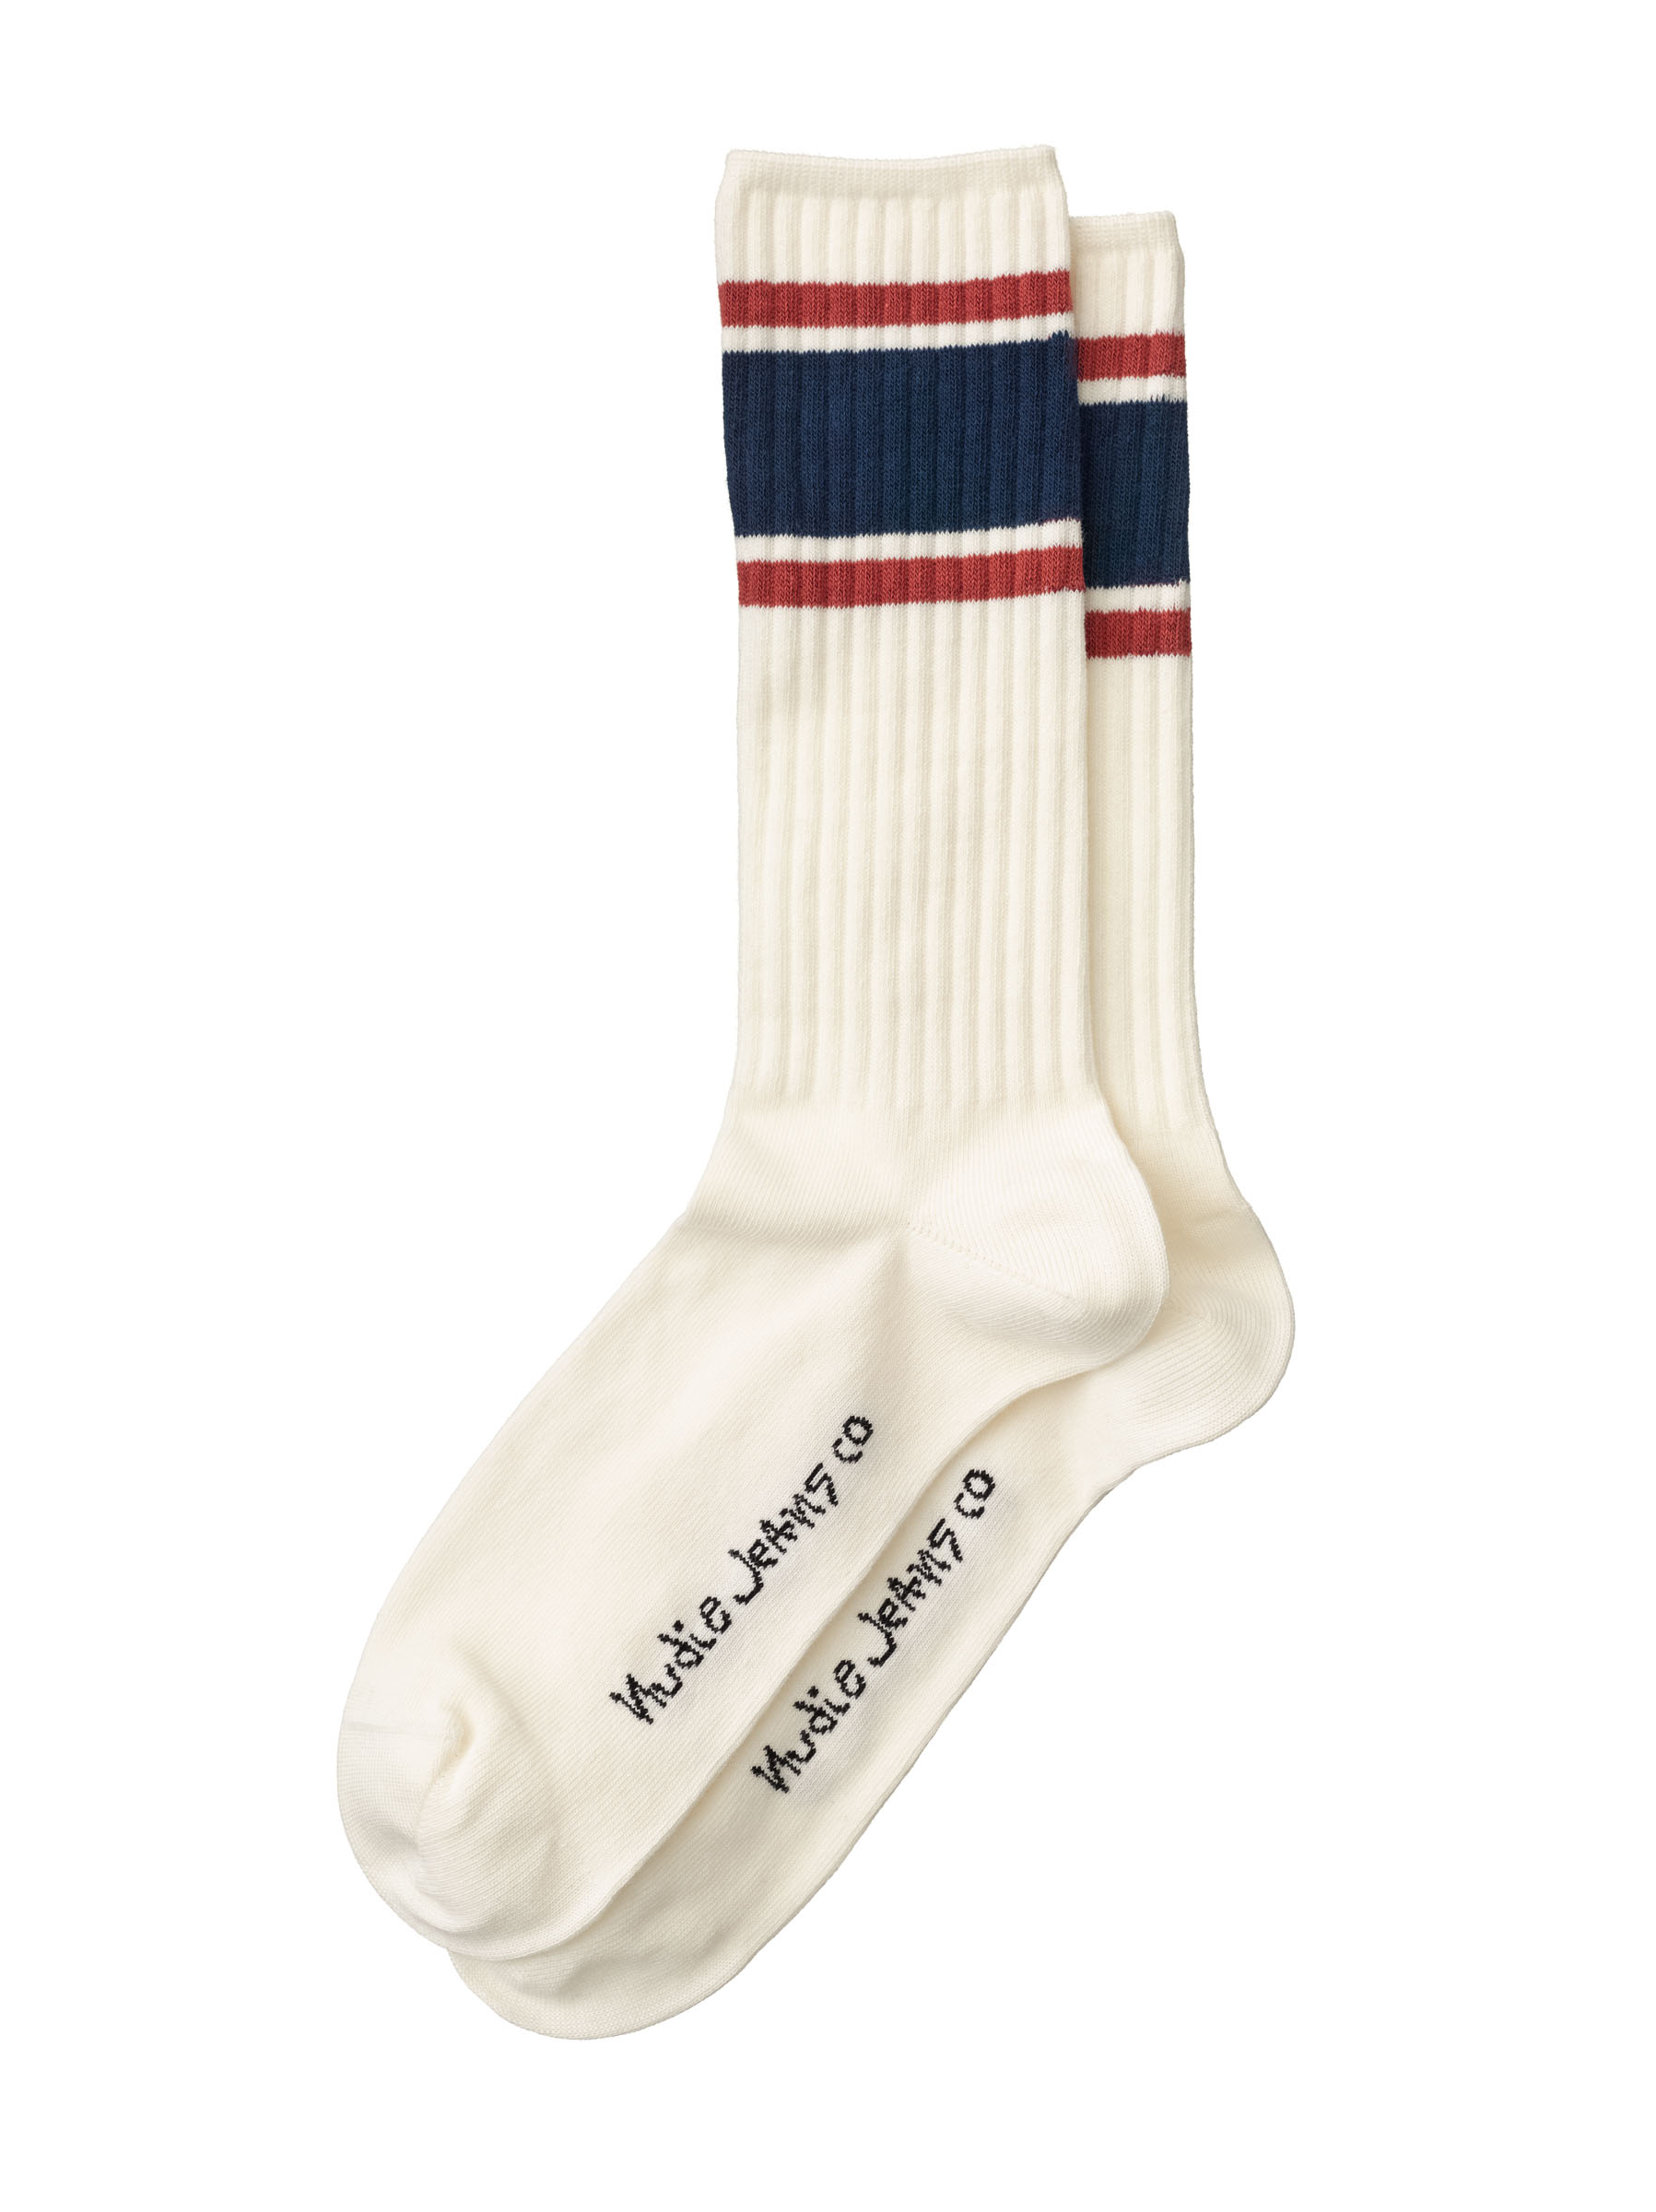 Amundsson Sport Socks blue One Size